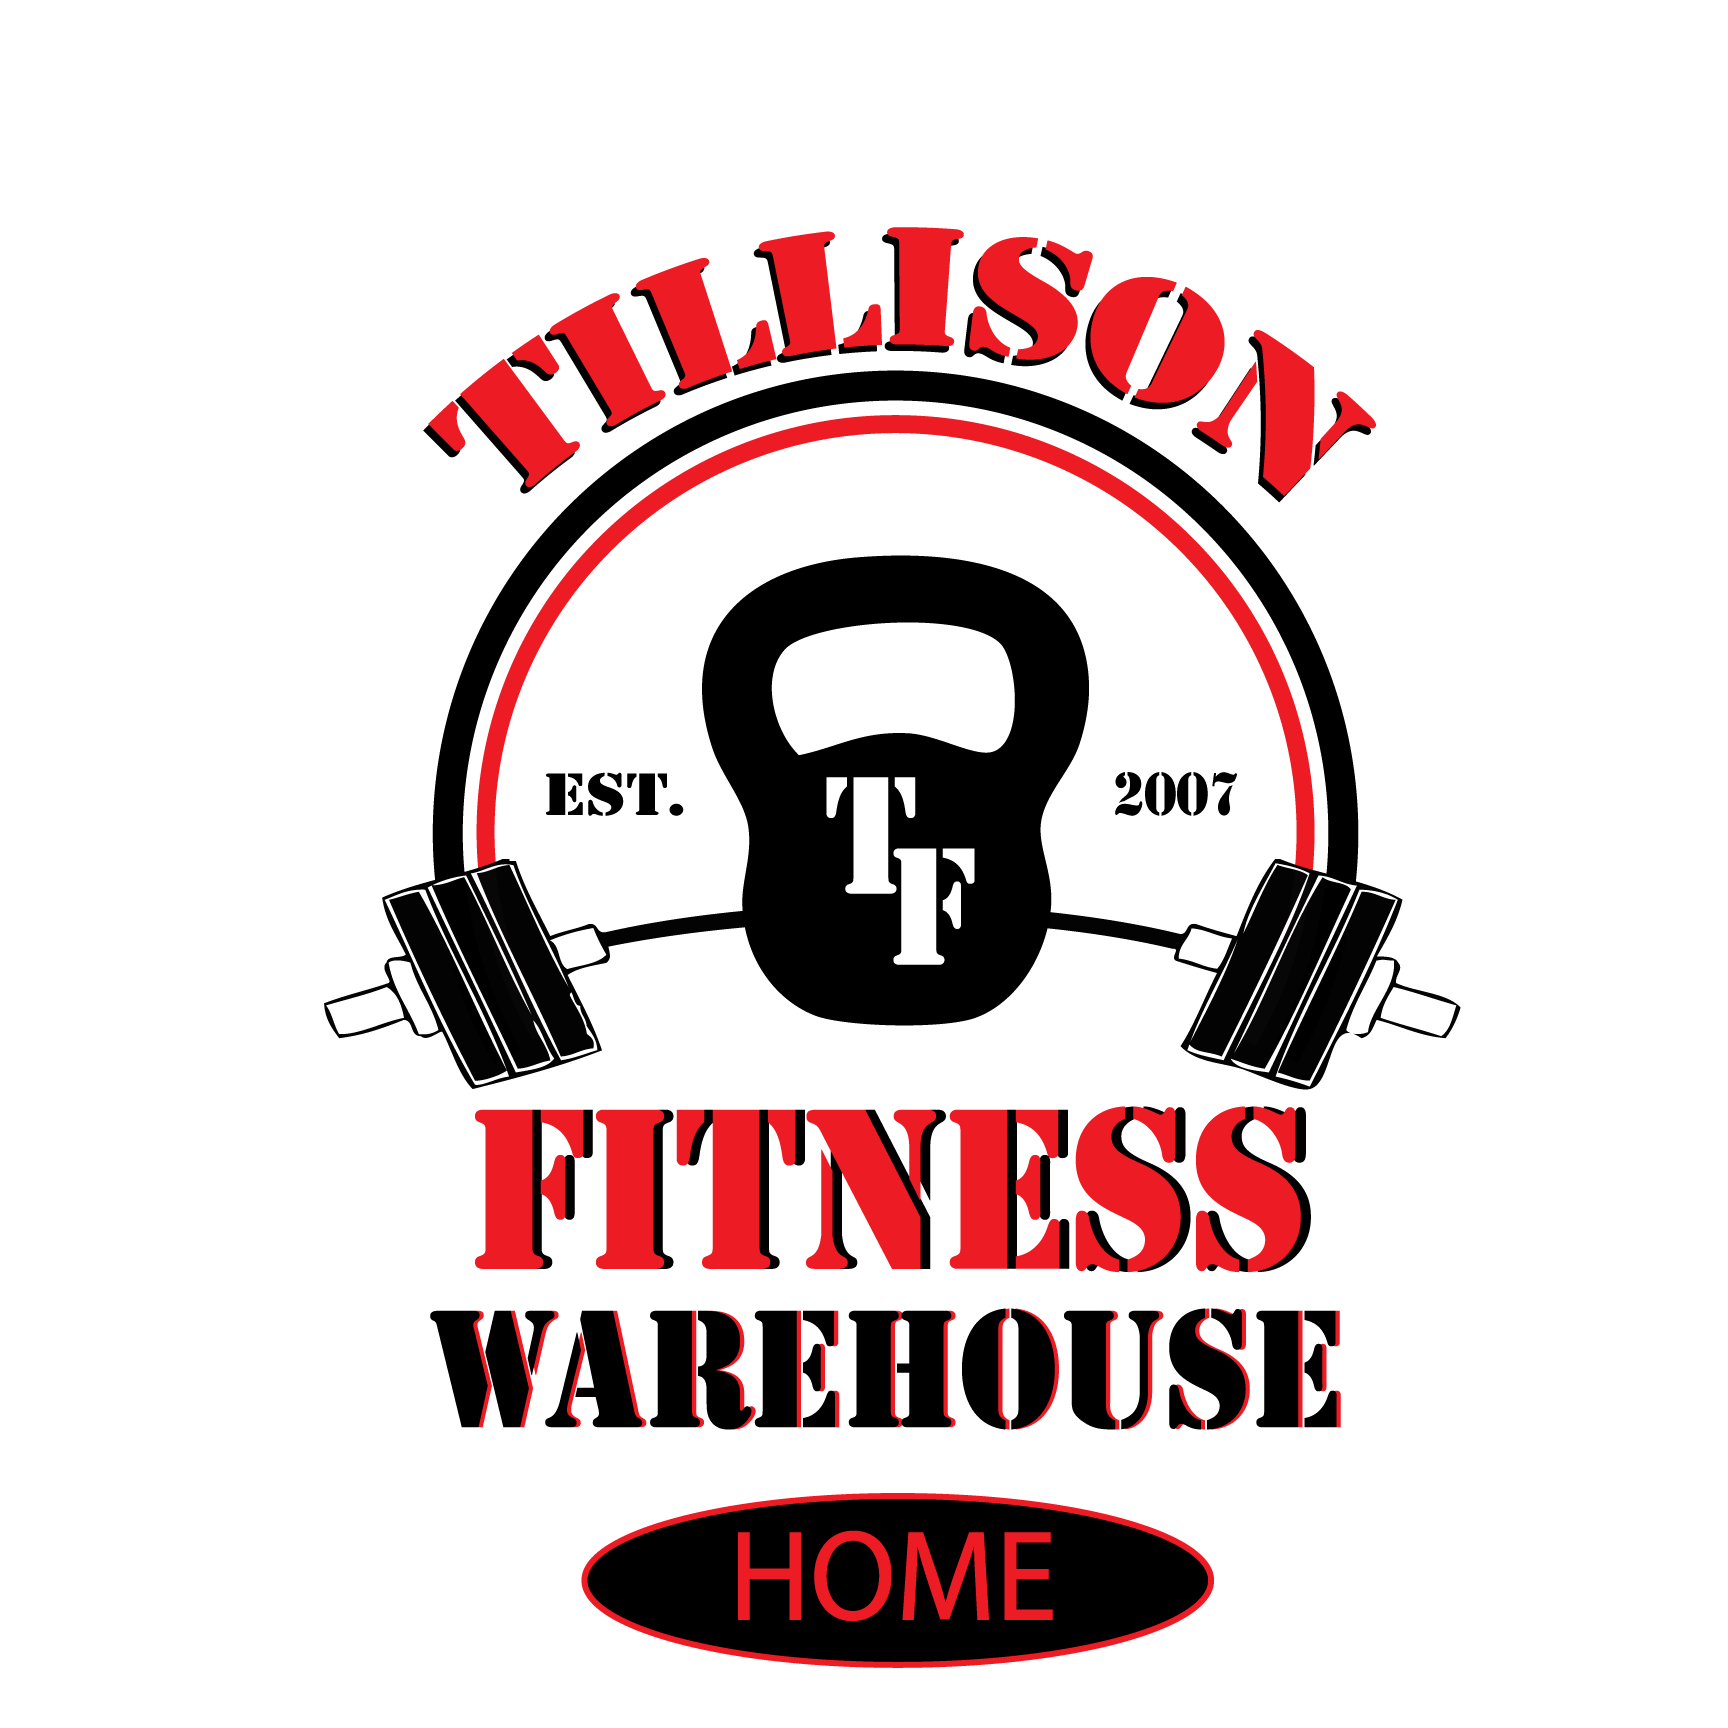 Tillison Fitness Warehouse